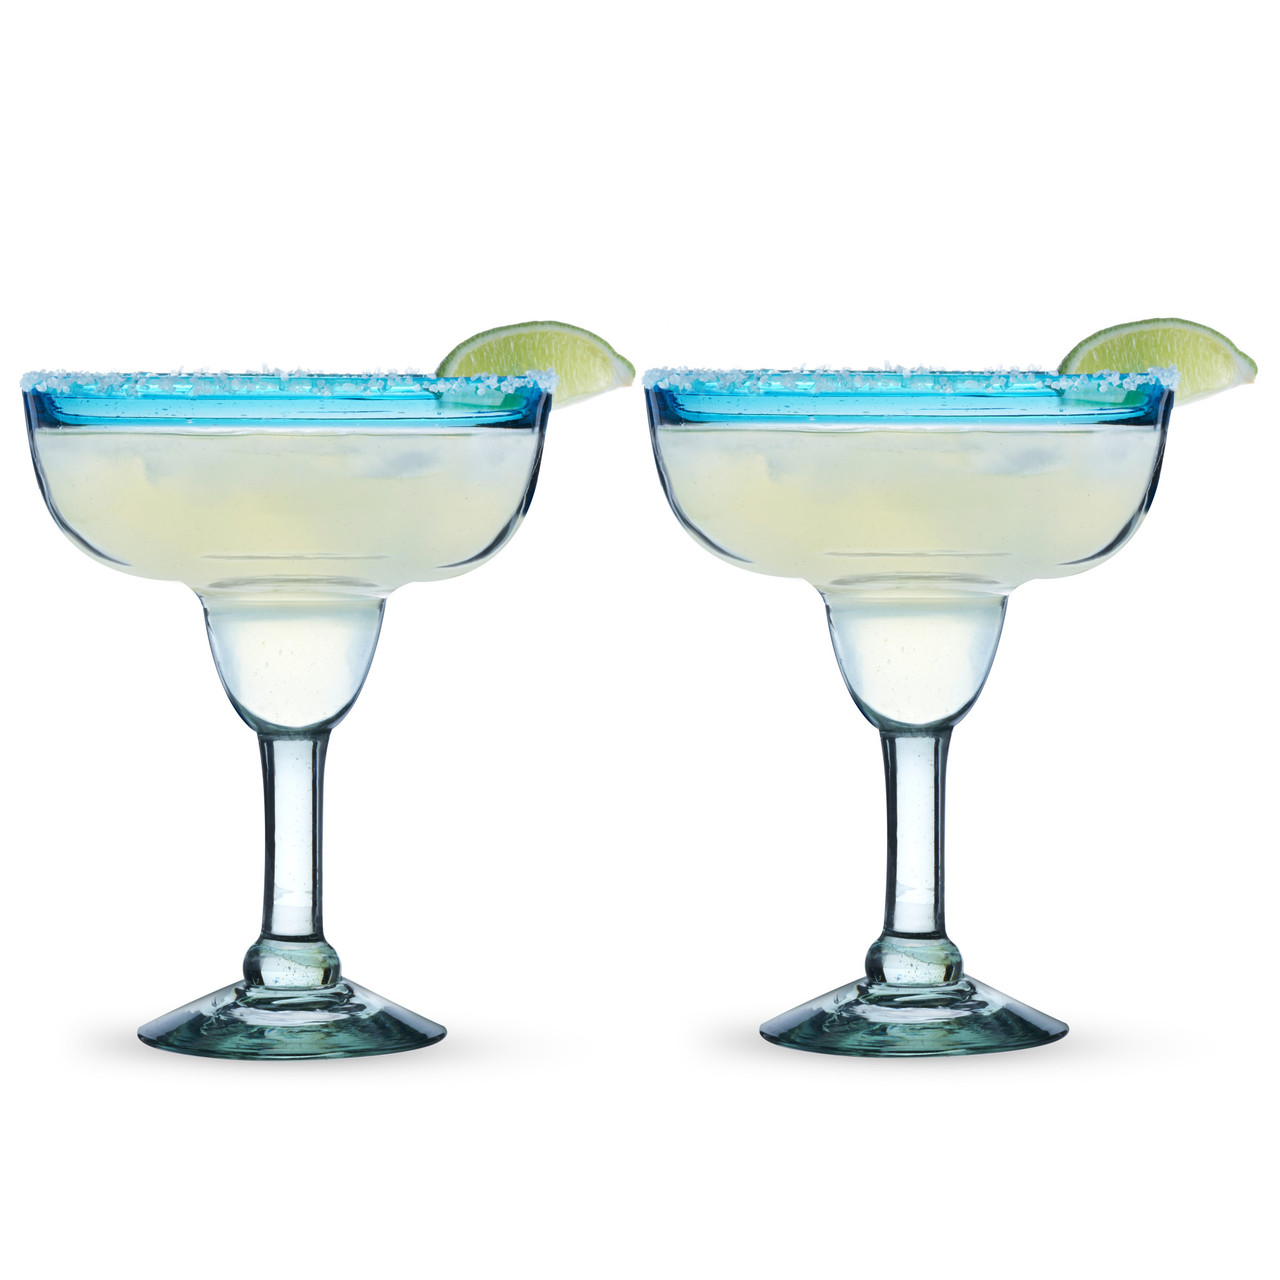 Colorful Margarita & Cocktail Glasses Set of 6 - Large 10.25 oz